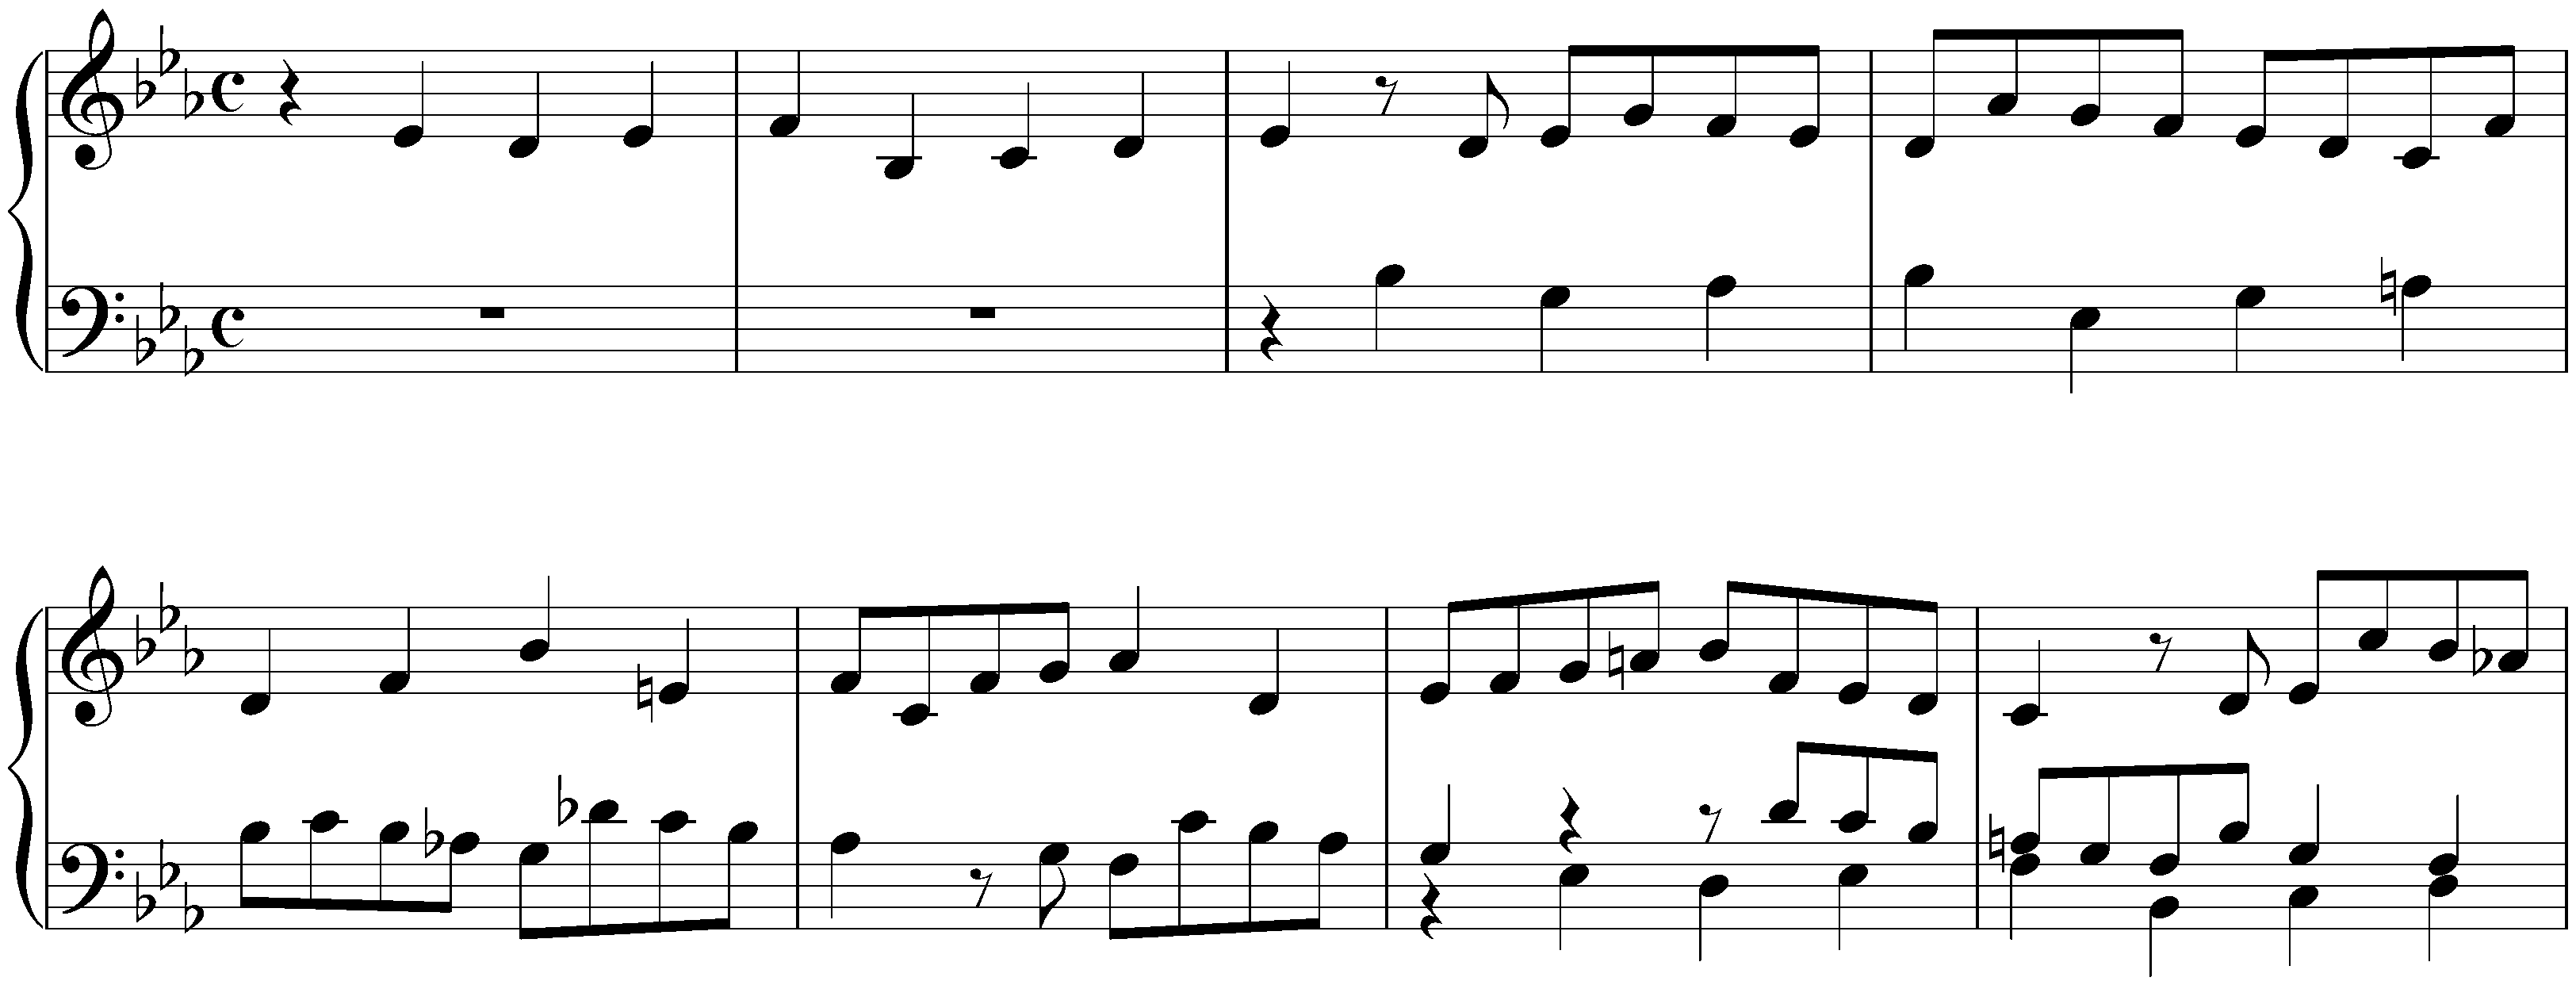 Prelude, Fugue and Allegro in E-flat major, BWV 998; 2. Fugue